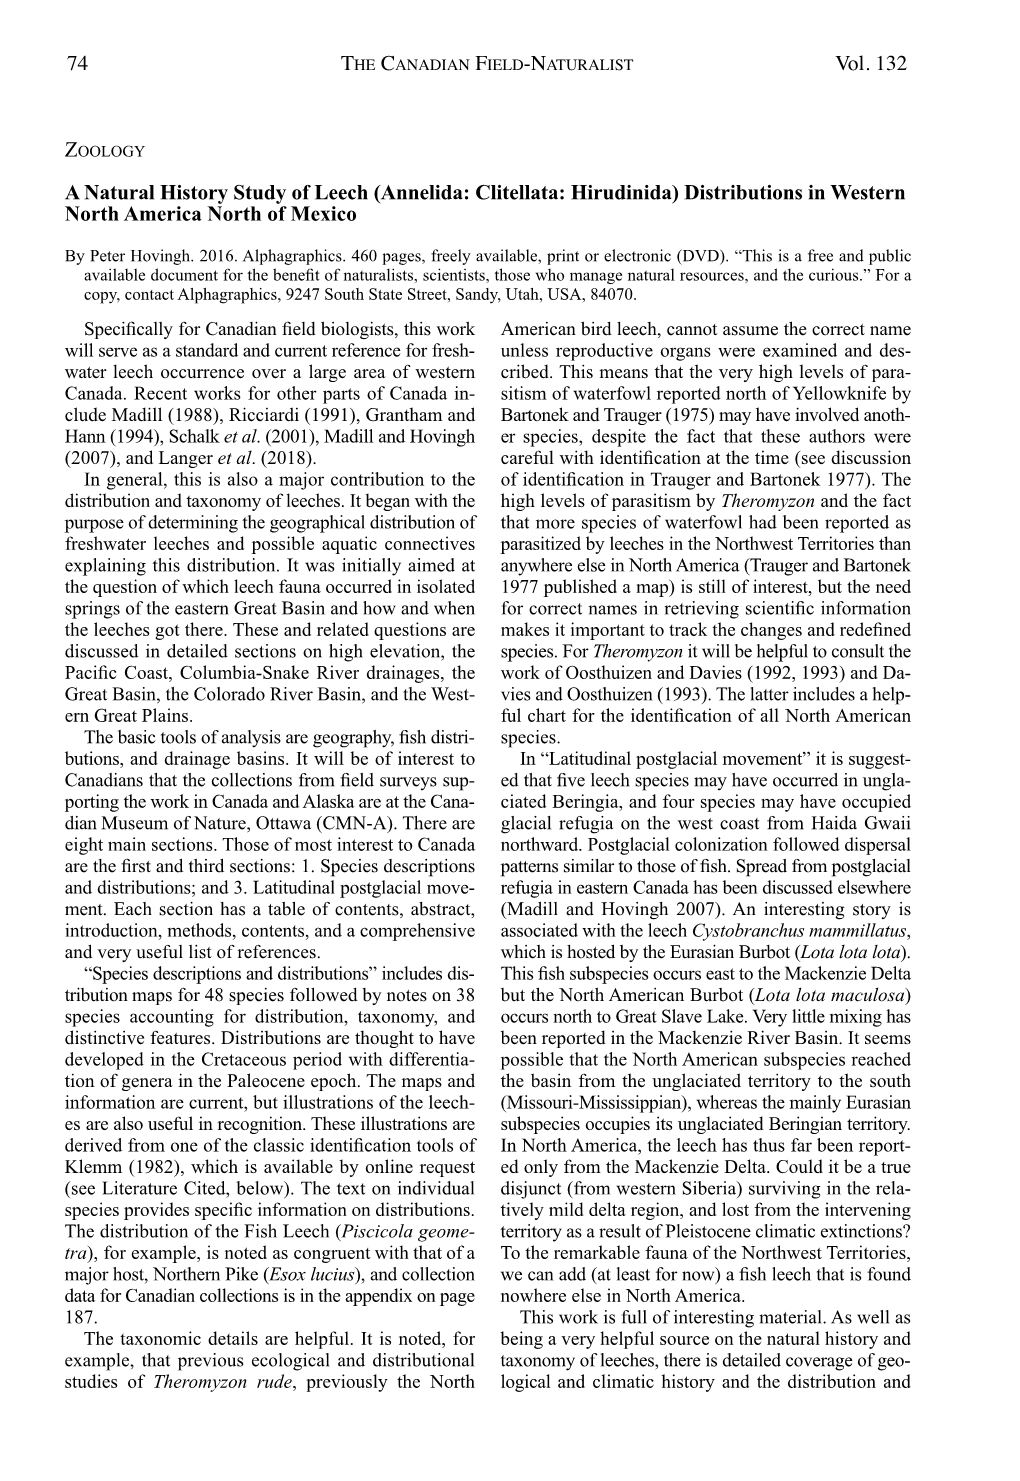 74 Vol. 132 a Natural History Study of Leech (Annelida: Clitellata: Hirudinida) Distributions in Western North America North